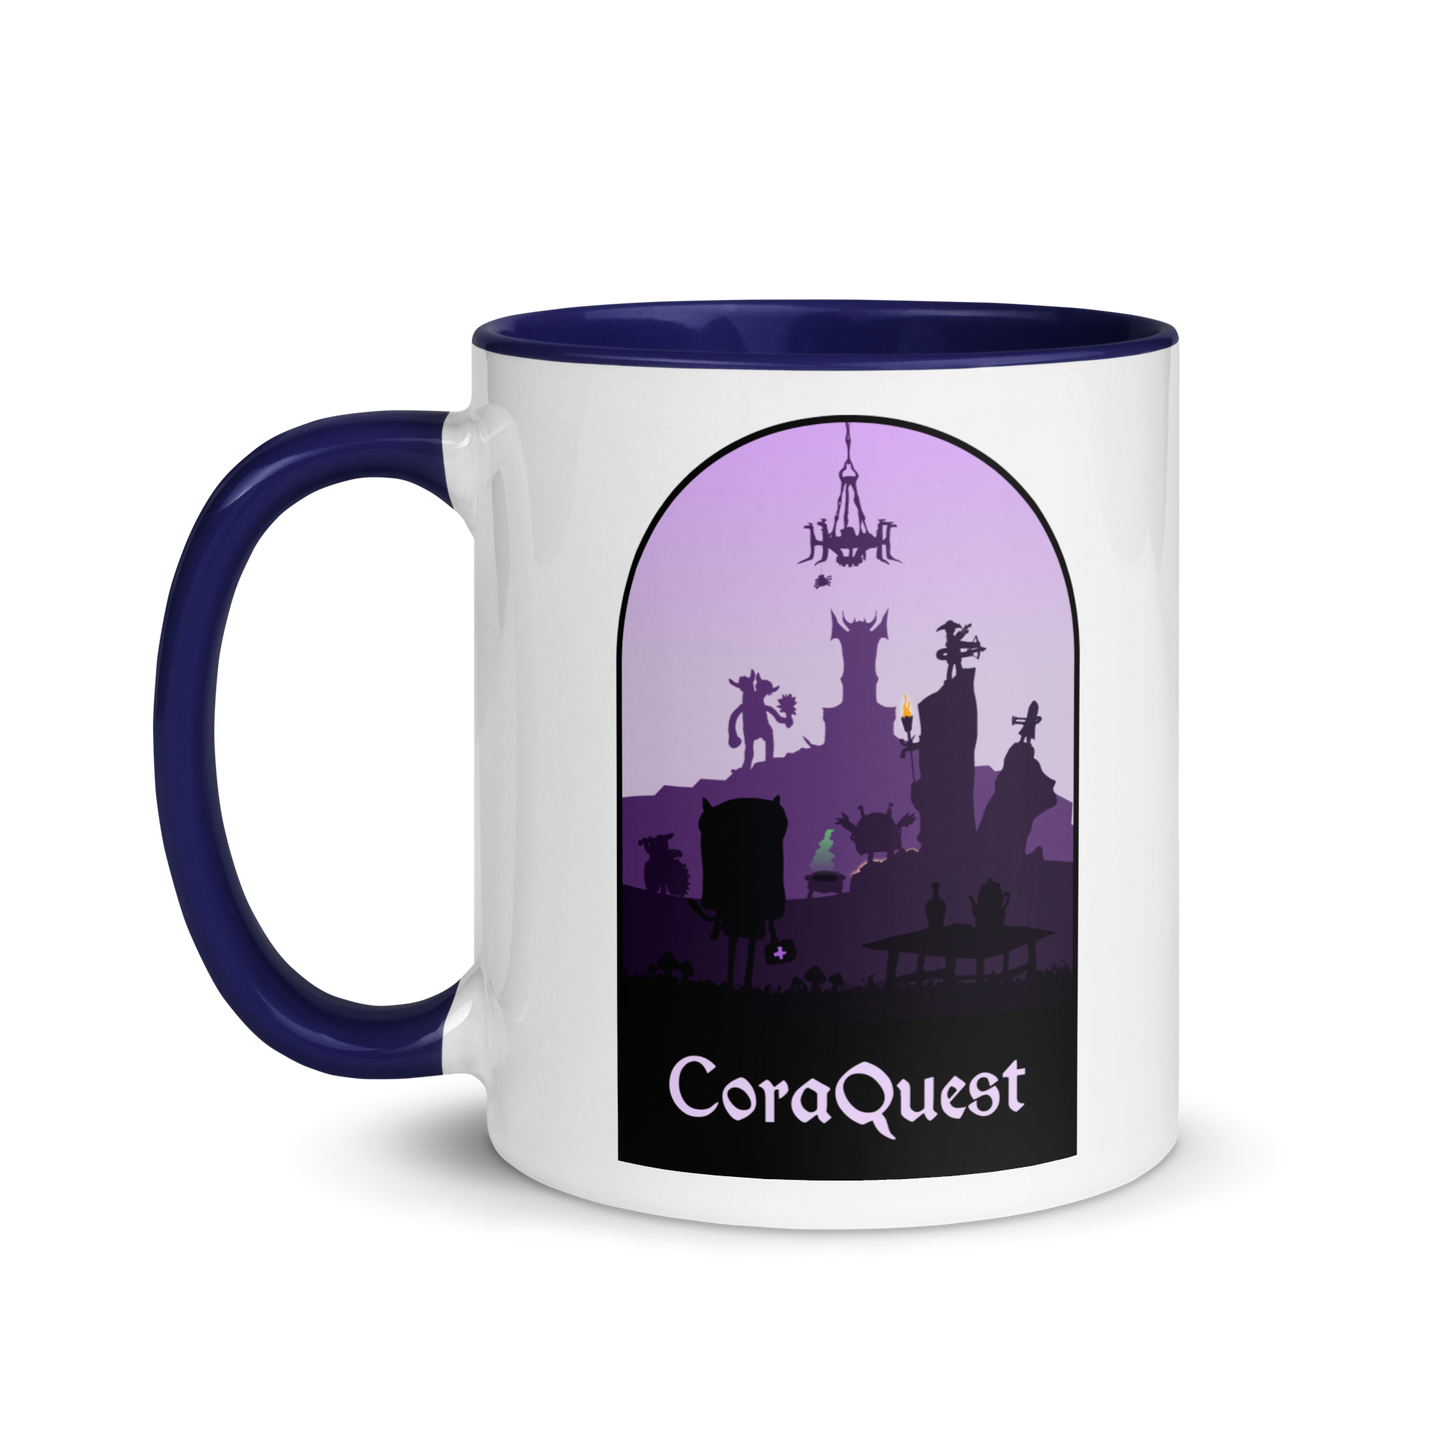 CoraQuest Minimalist Board Game Mug